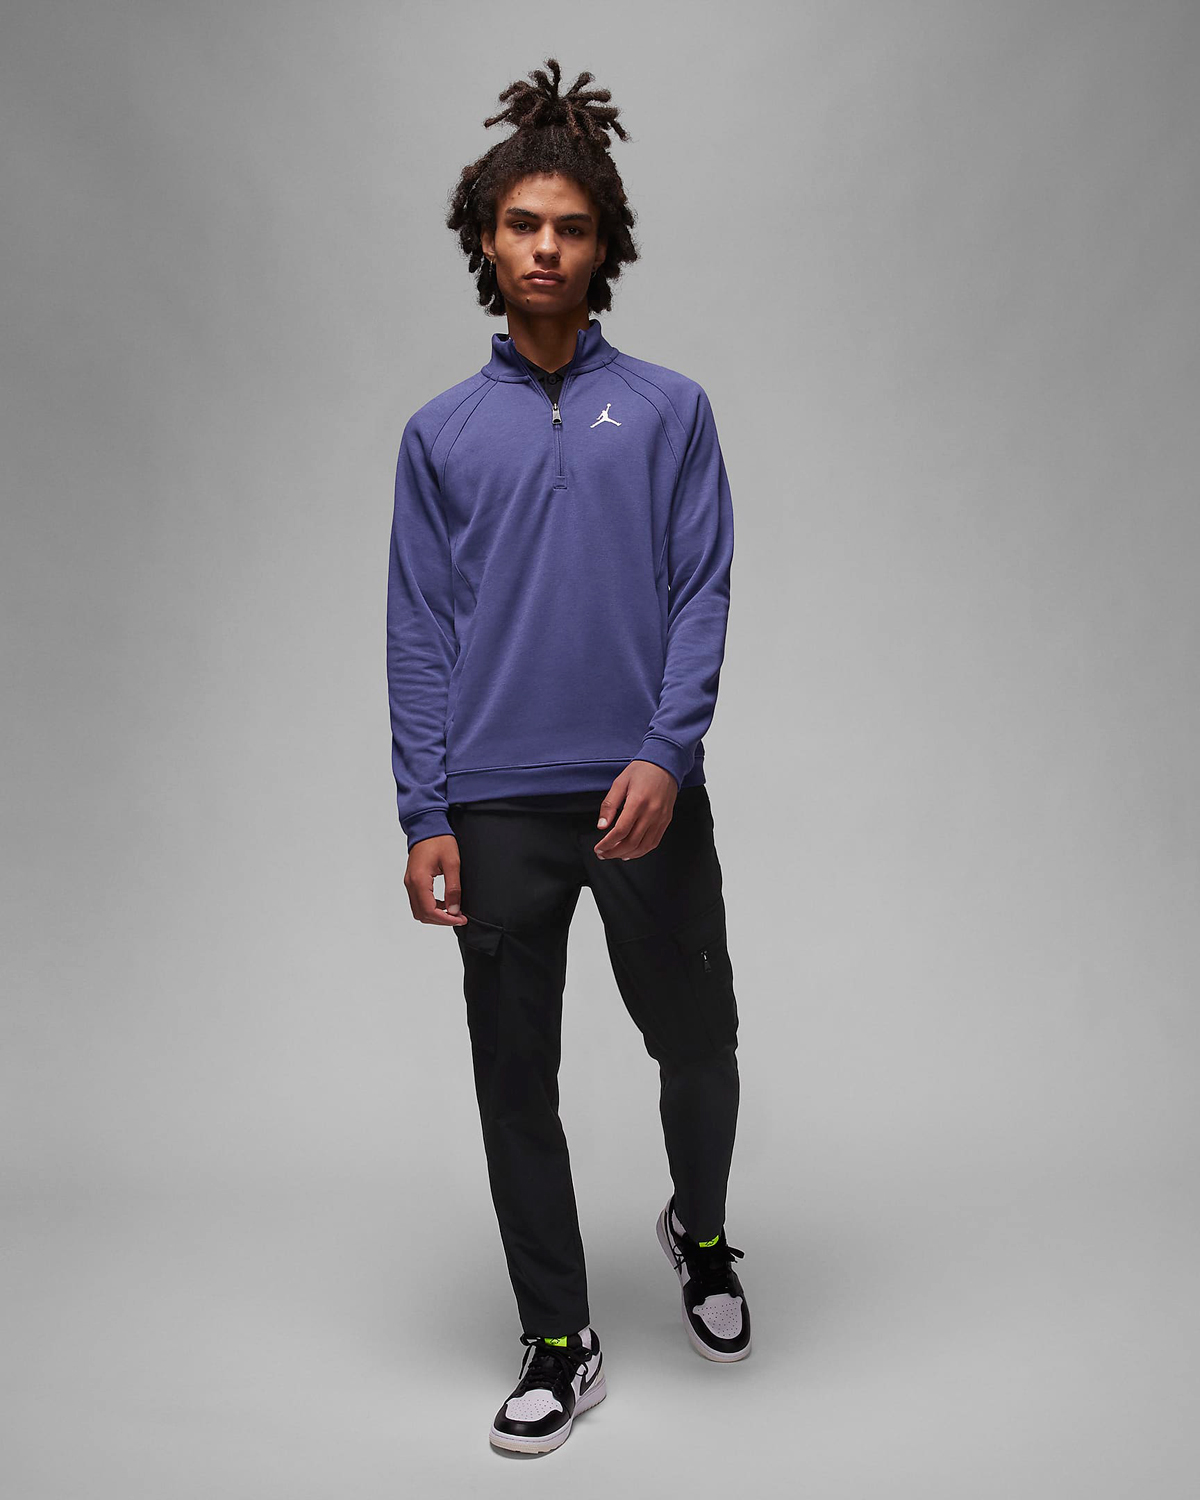 Jordan-Golf-Clothing-Sky-J-Purple